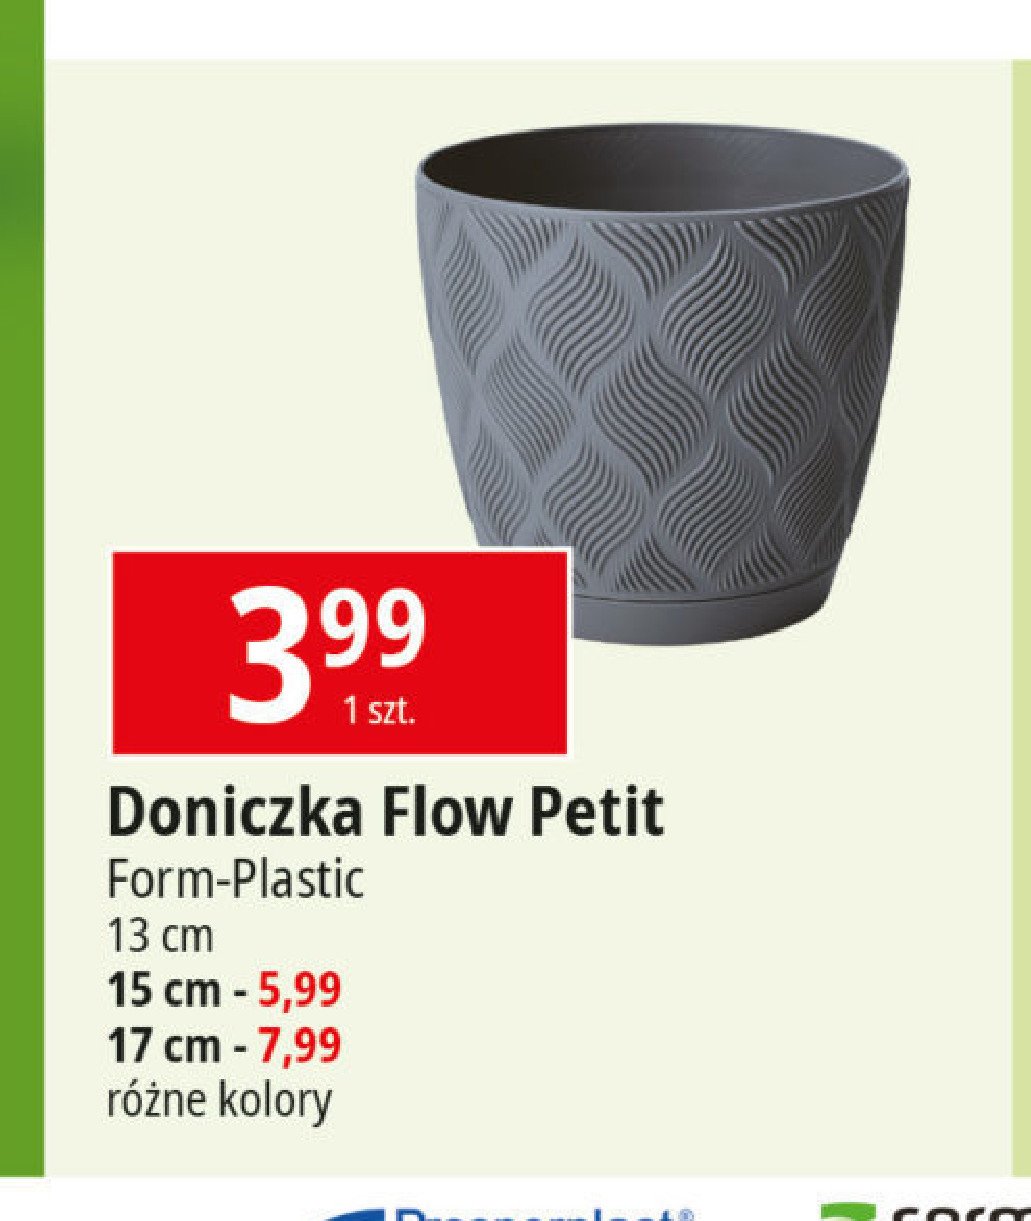 Doniczka flow petit 13.7 cm FORMPLASTIK promocja